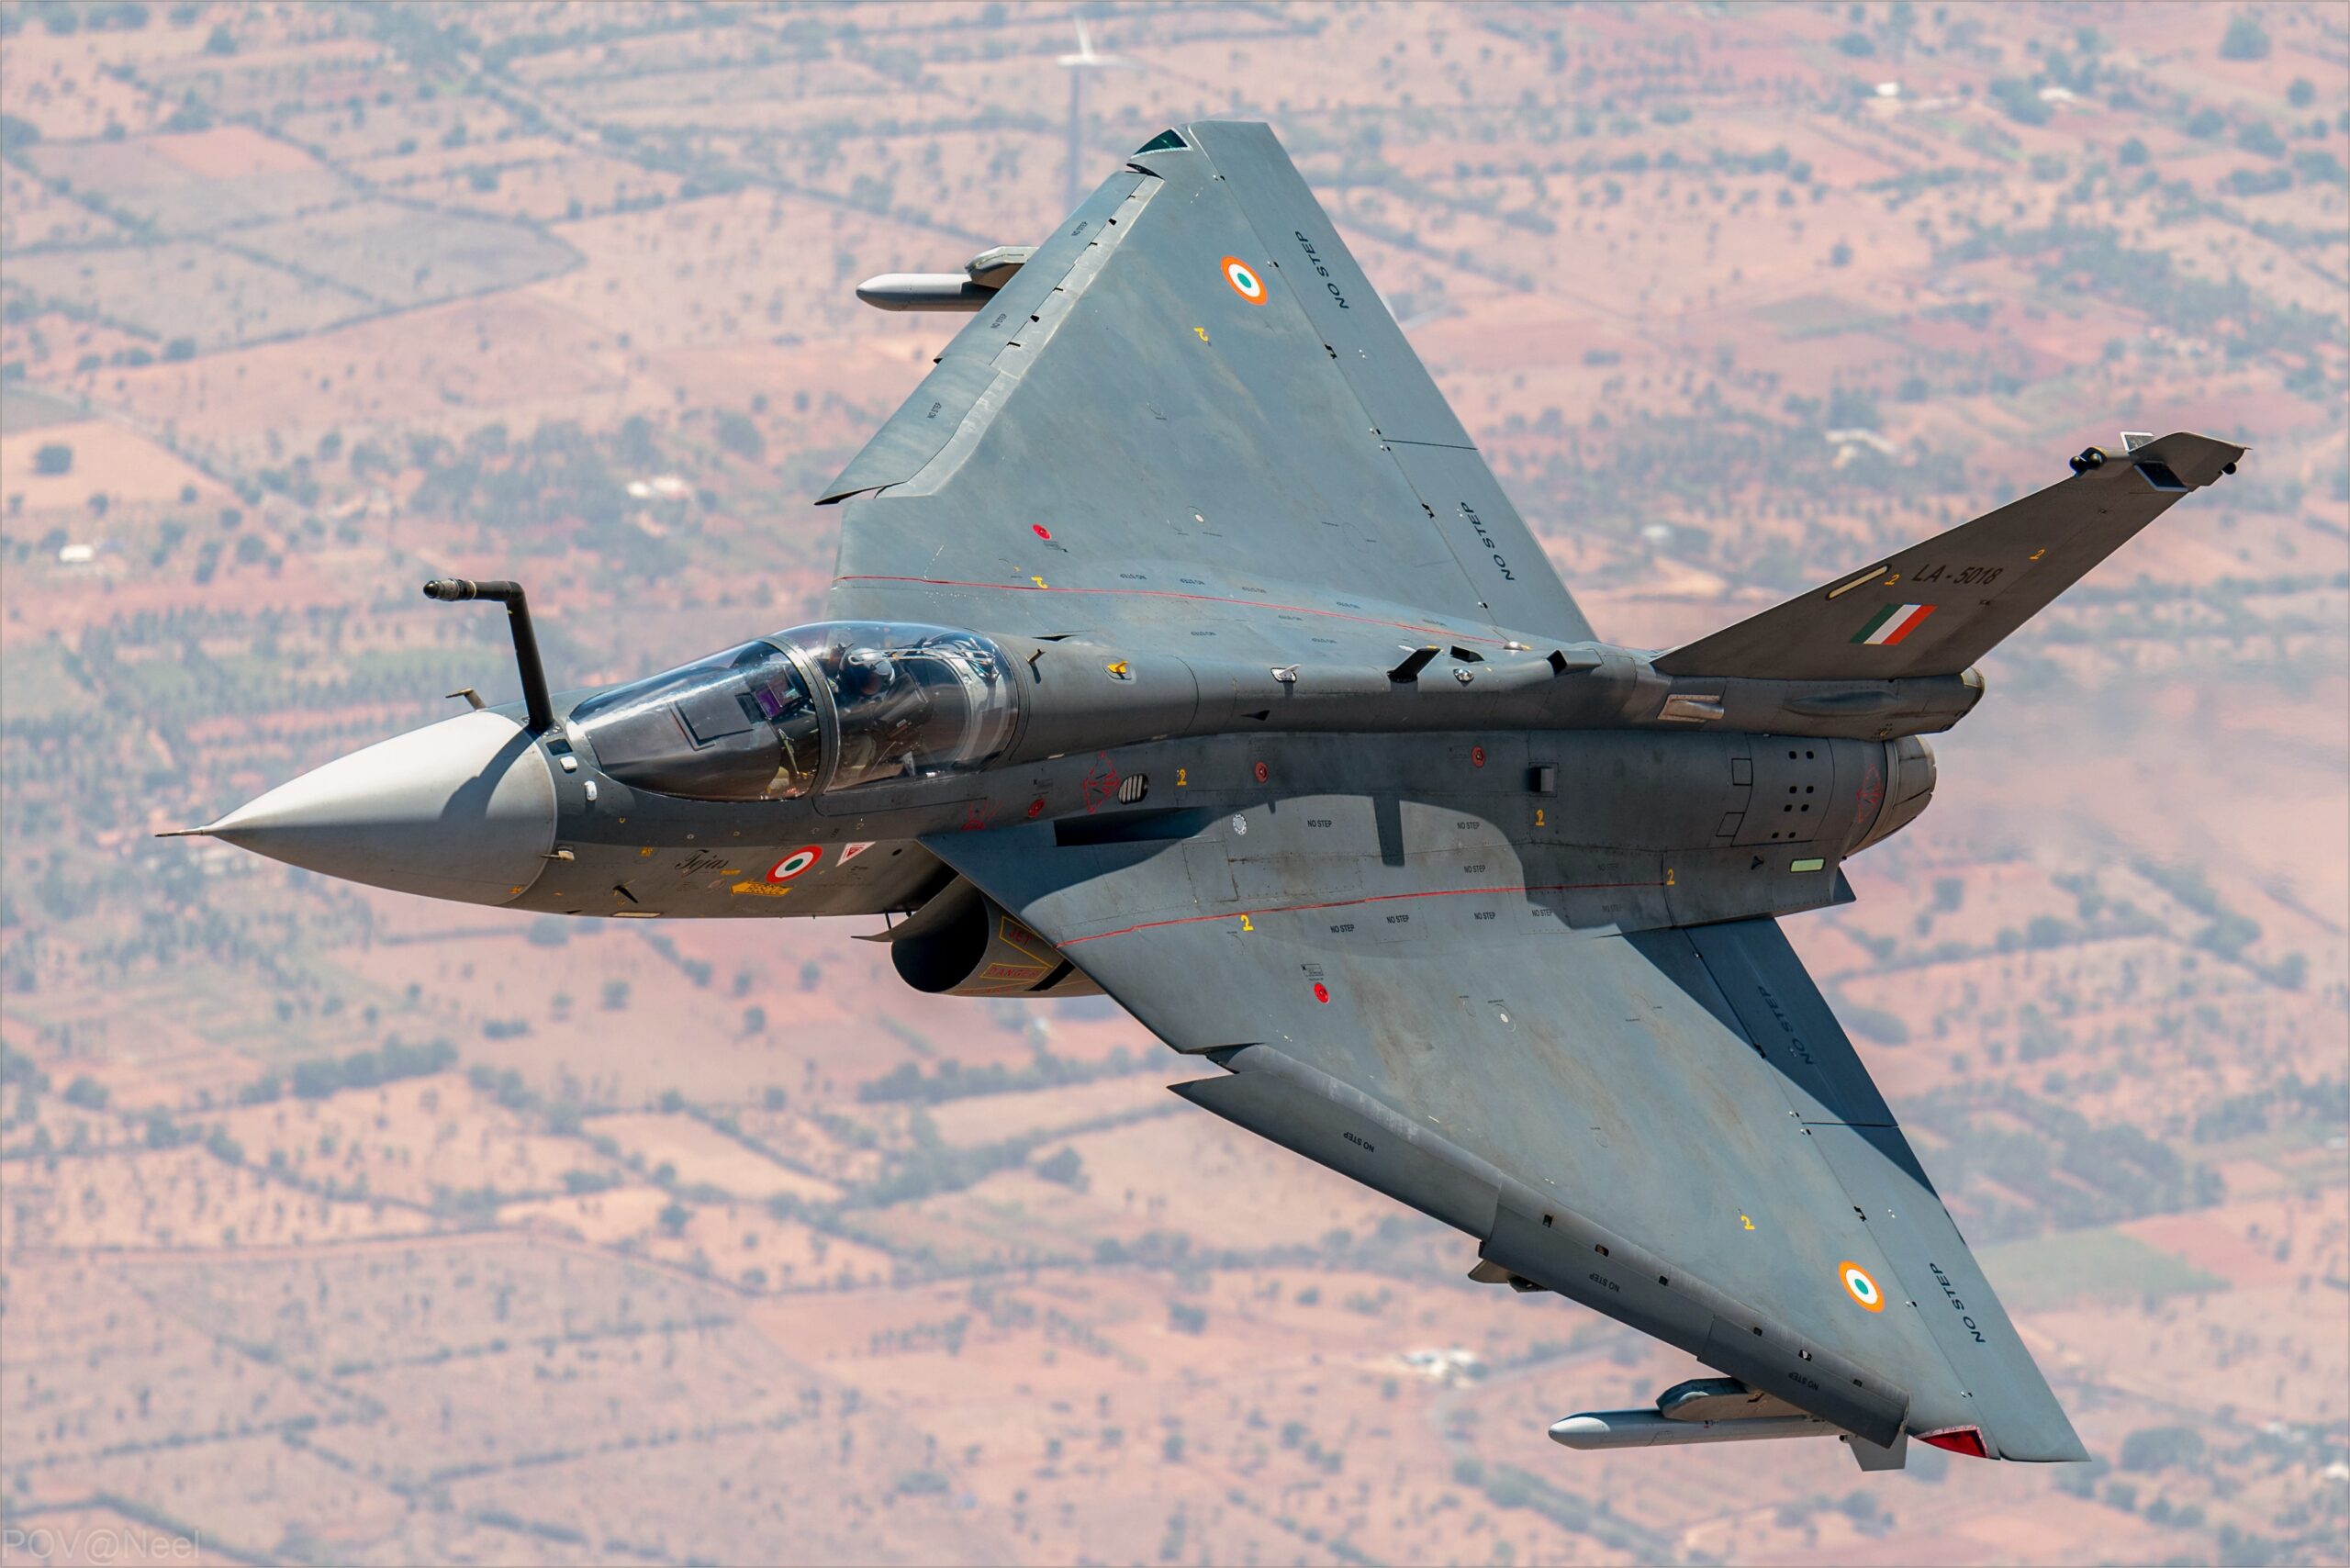 India To Fully Indigenous Tejas Aircraft Soon: Rajnath Singh